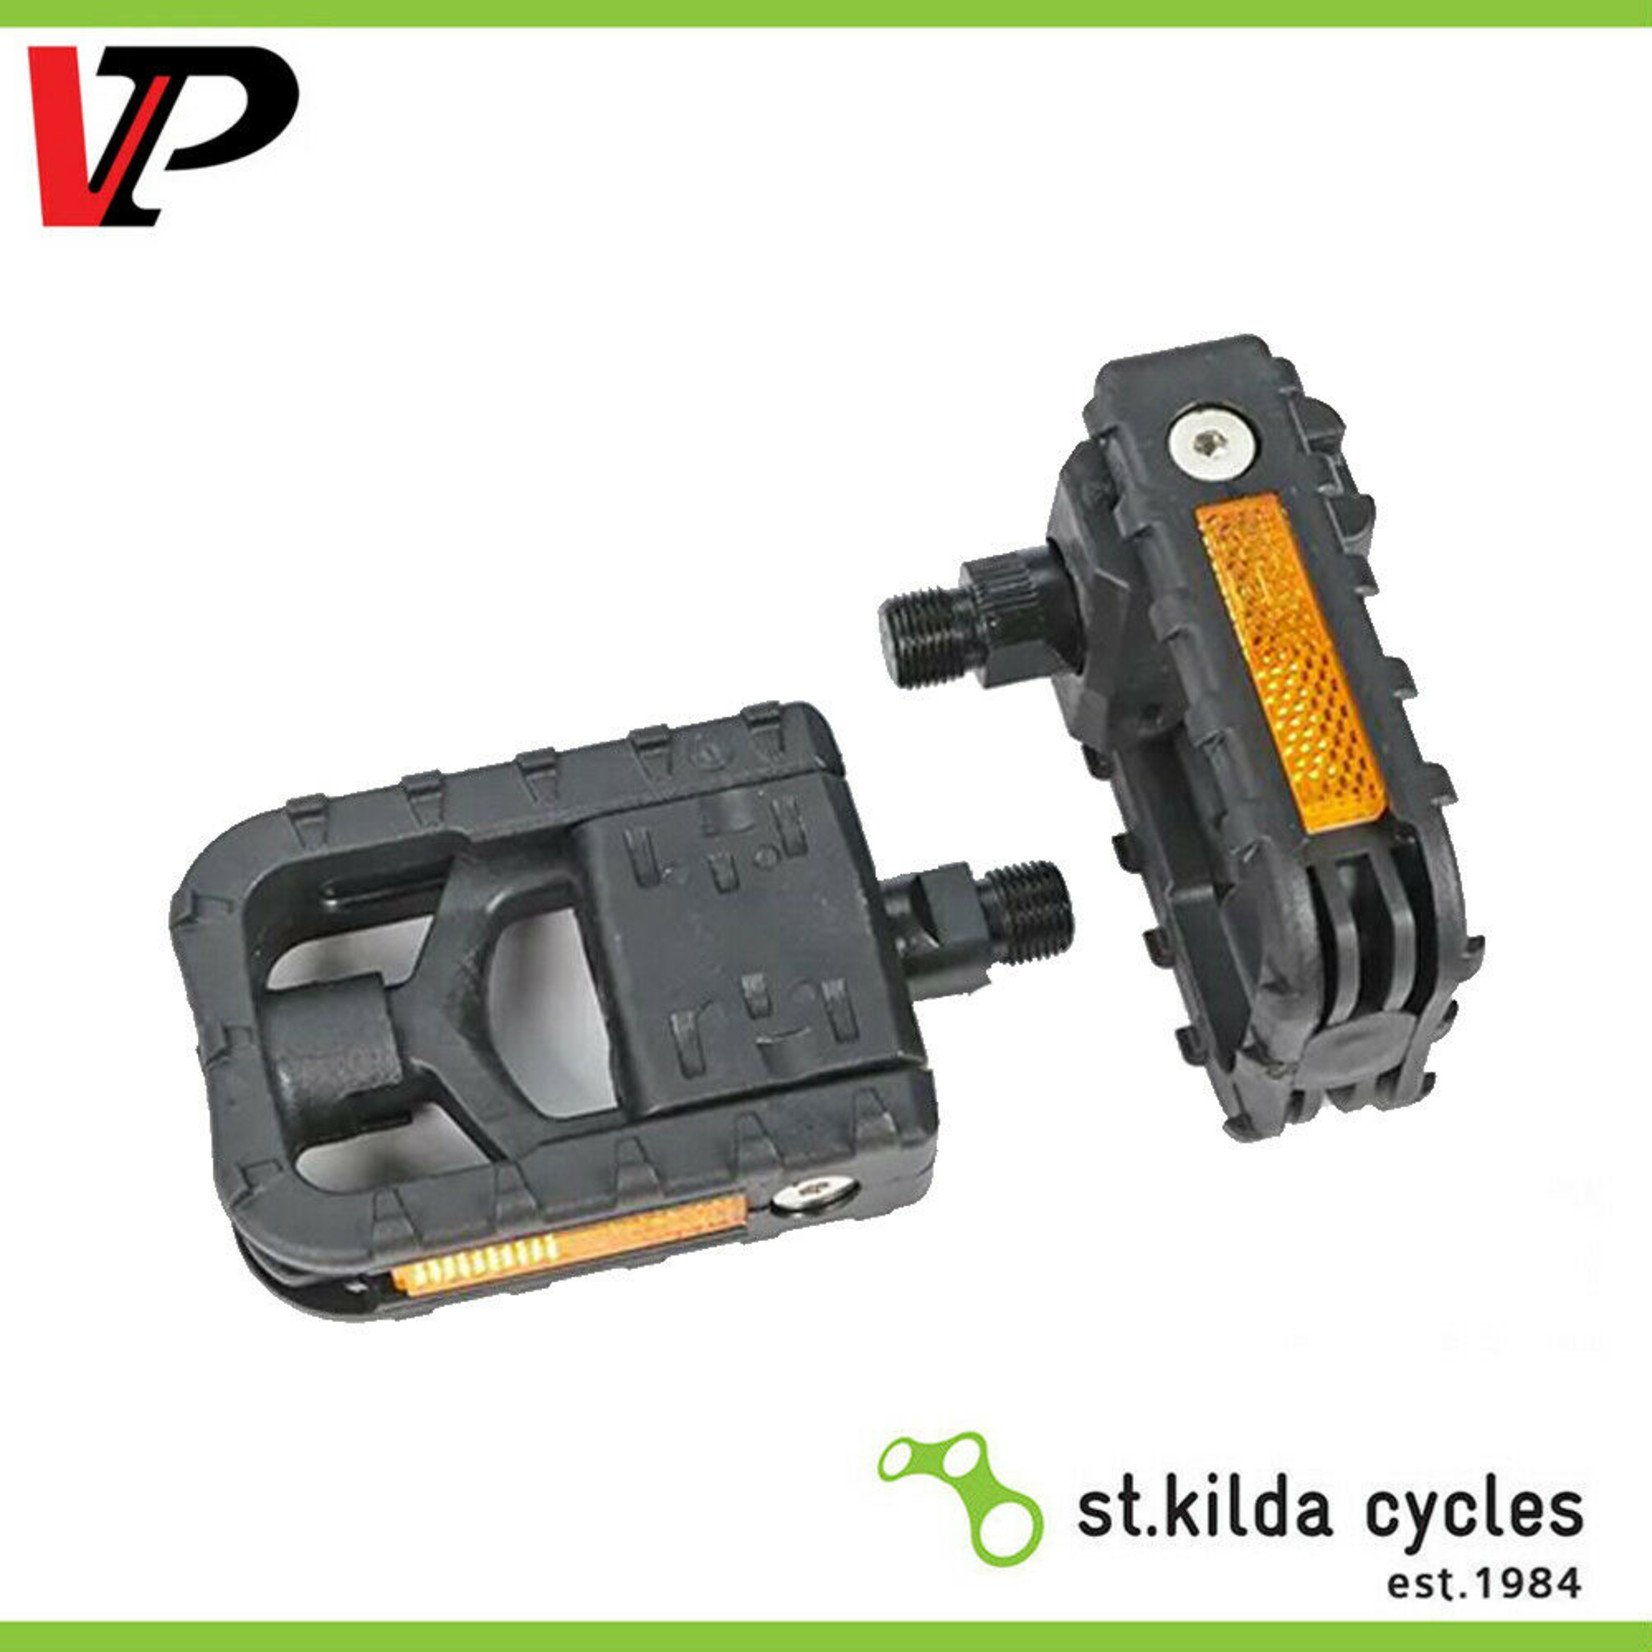 Incomex Trading Pty Ltd VP Bike Pedals 9/16" Folding Fiberglass/Nylon Platform - Black